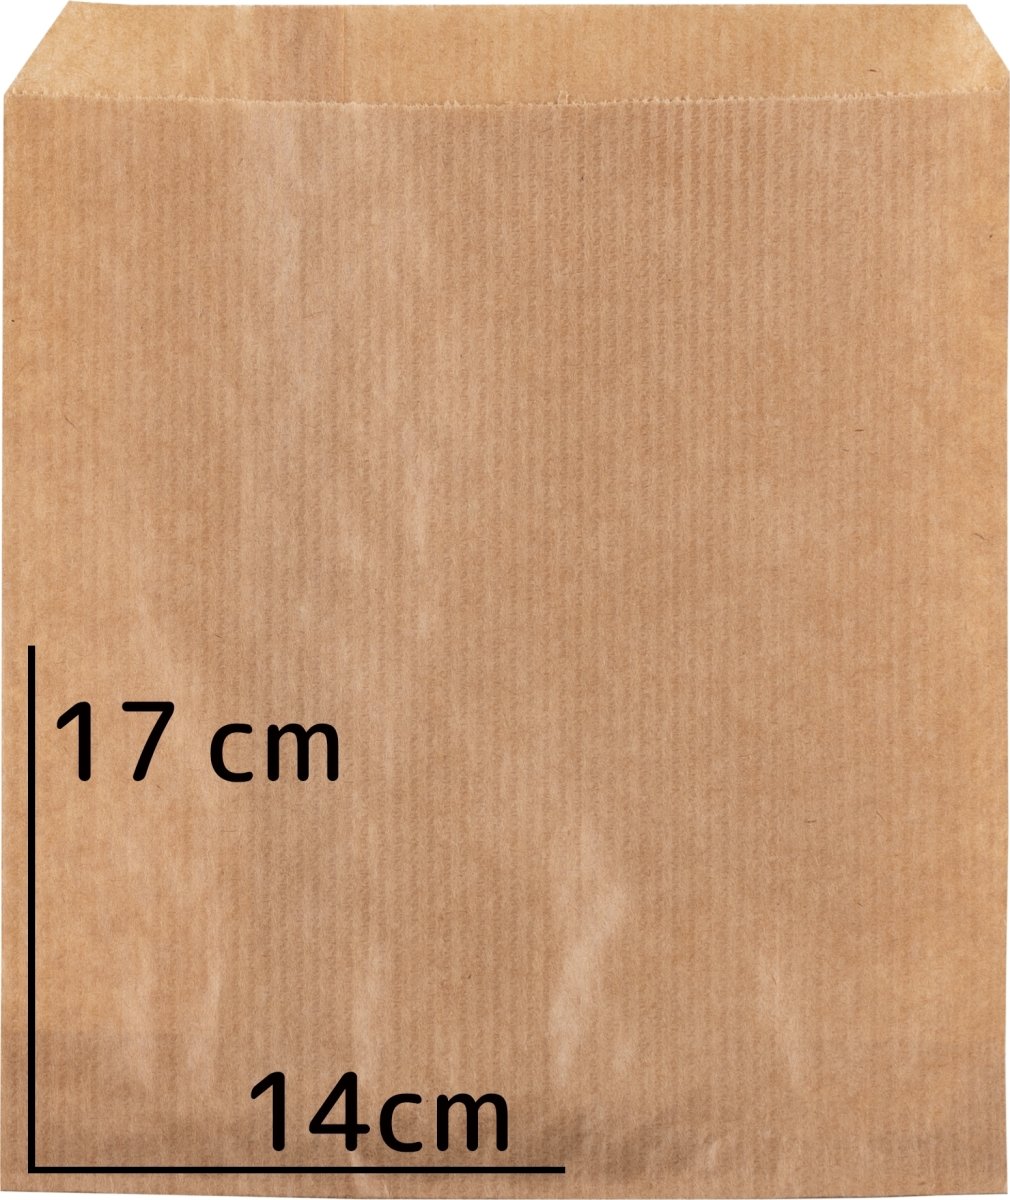 Papirpose 14 x 17 cm, 40g, brun